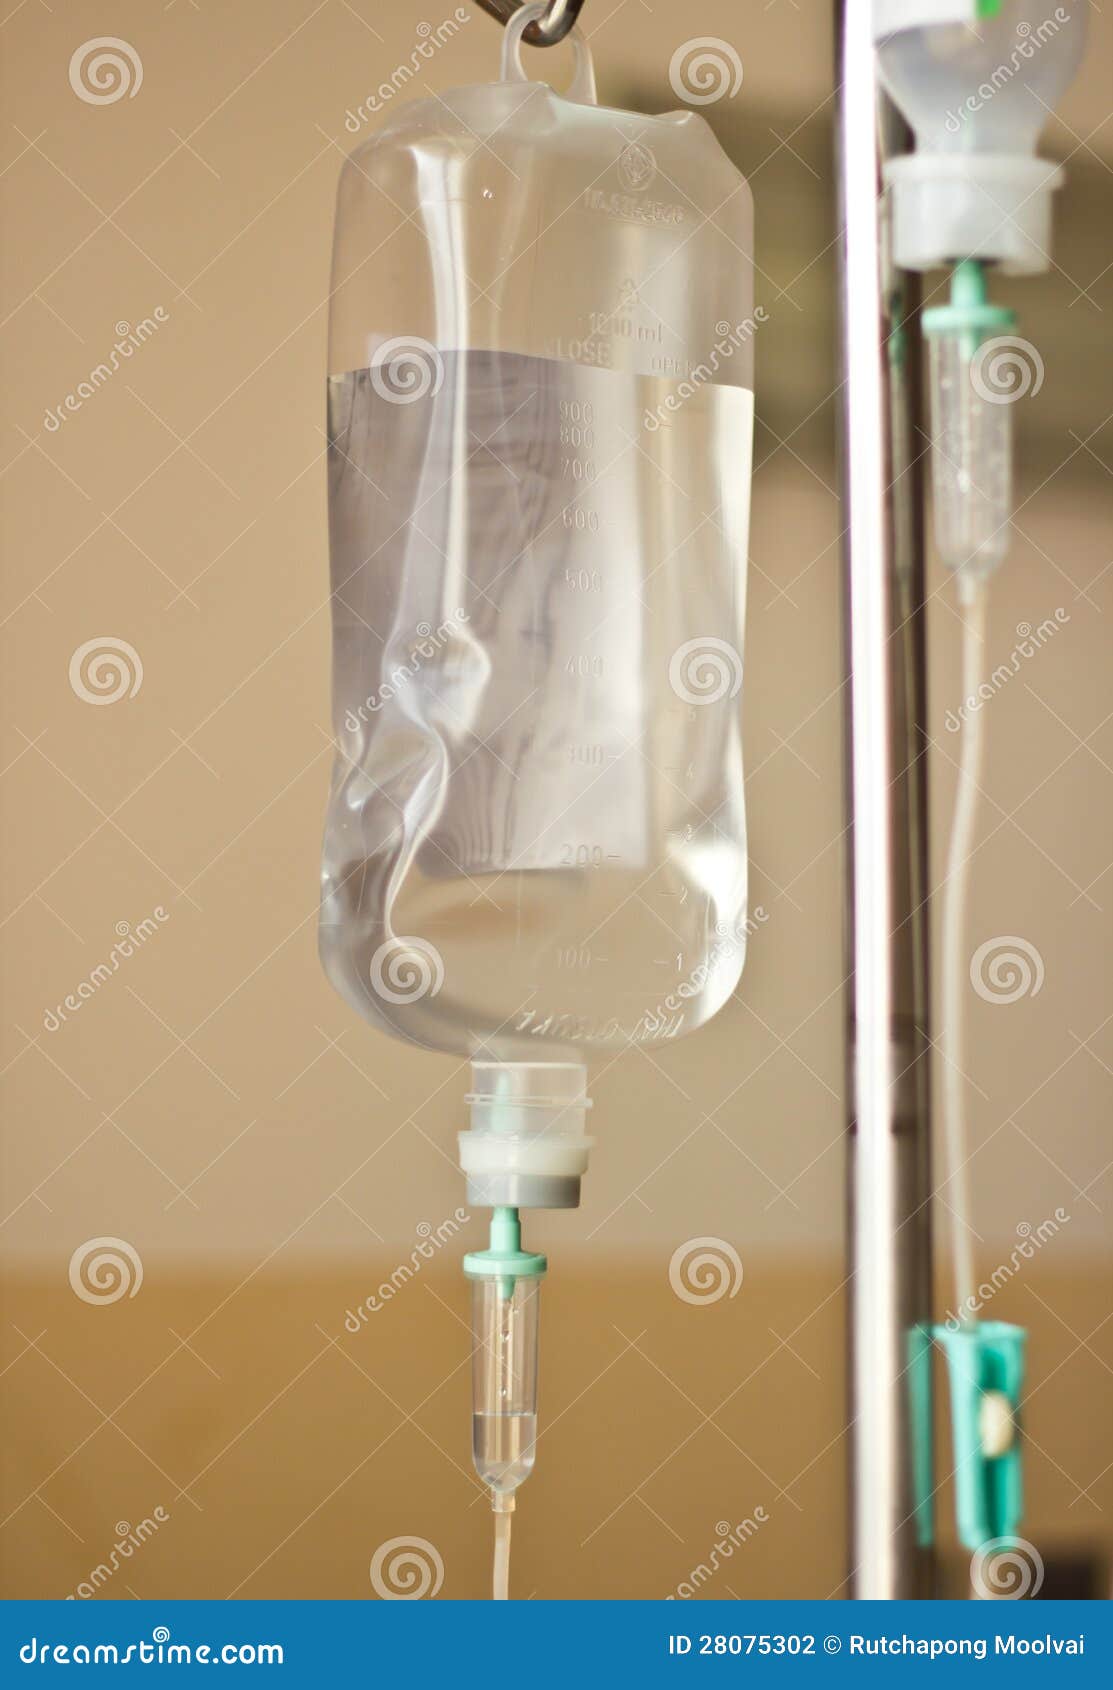 IV Bag Hanging On A Metal Pole Stock Photo - Image of ...